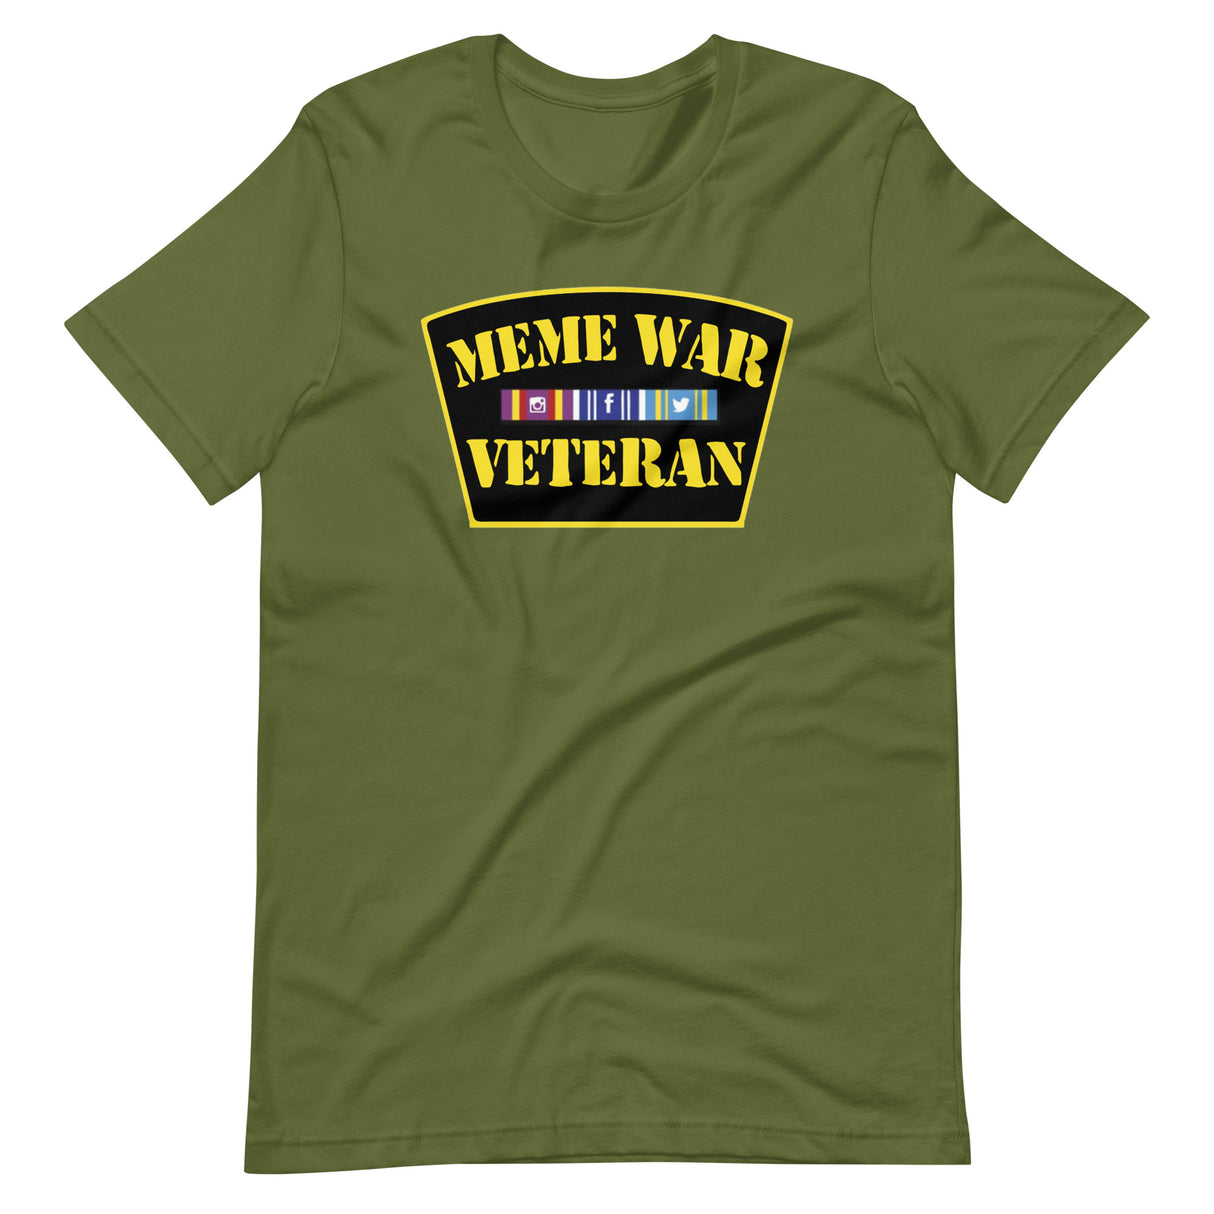 Meme War Veteran Shirt